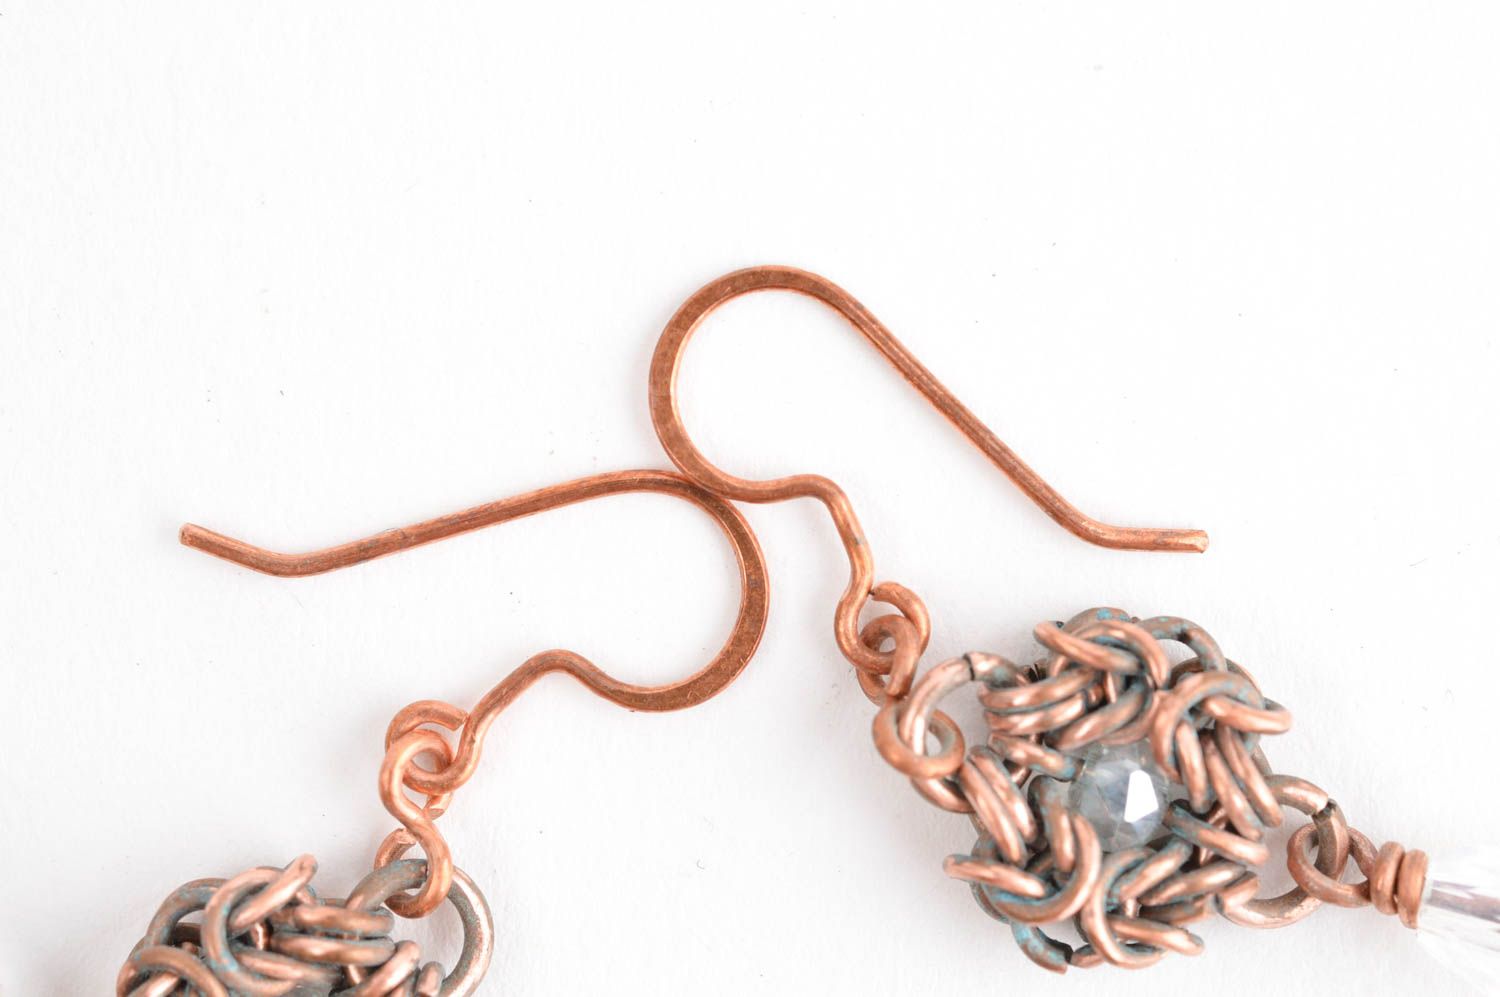 Copper earrings handmade wire wrap earrings metal earrings with charms for girls photo 4